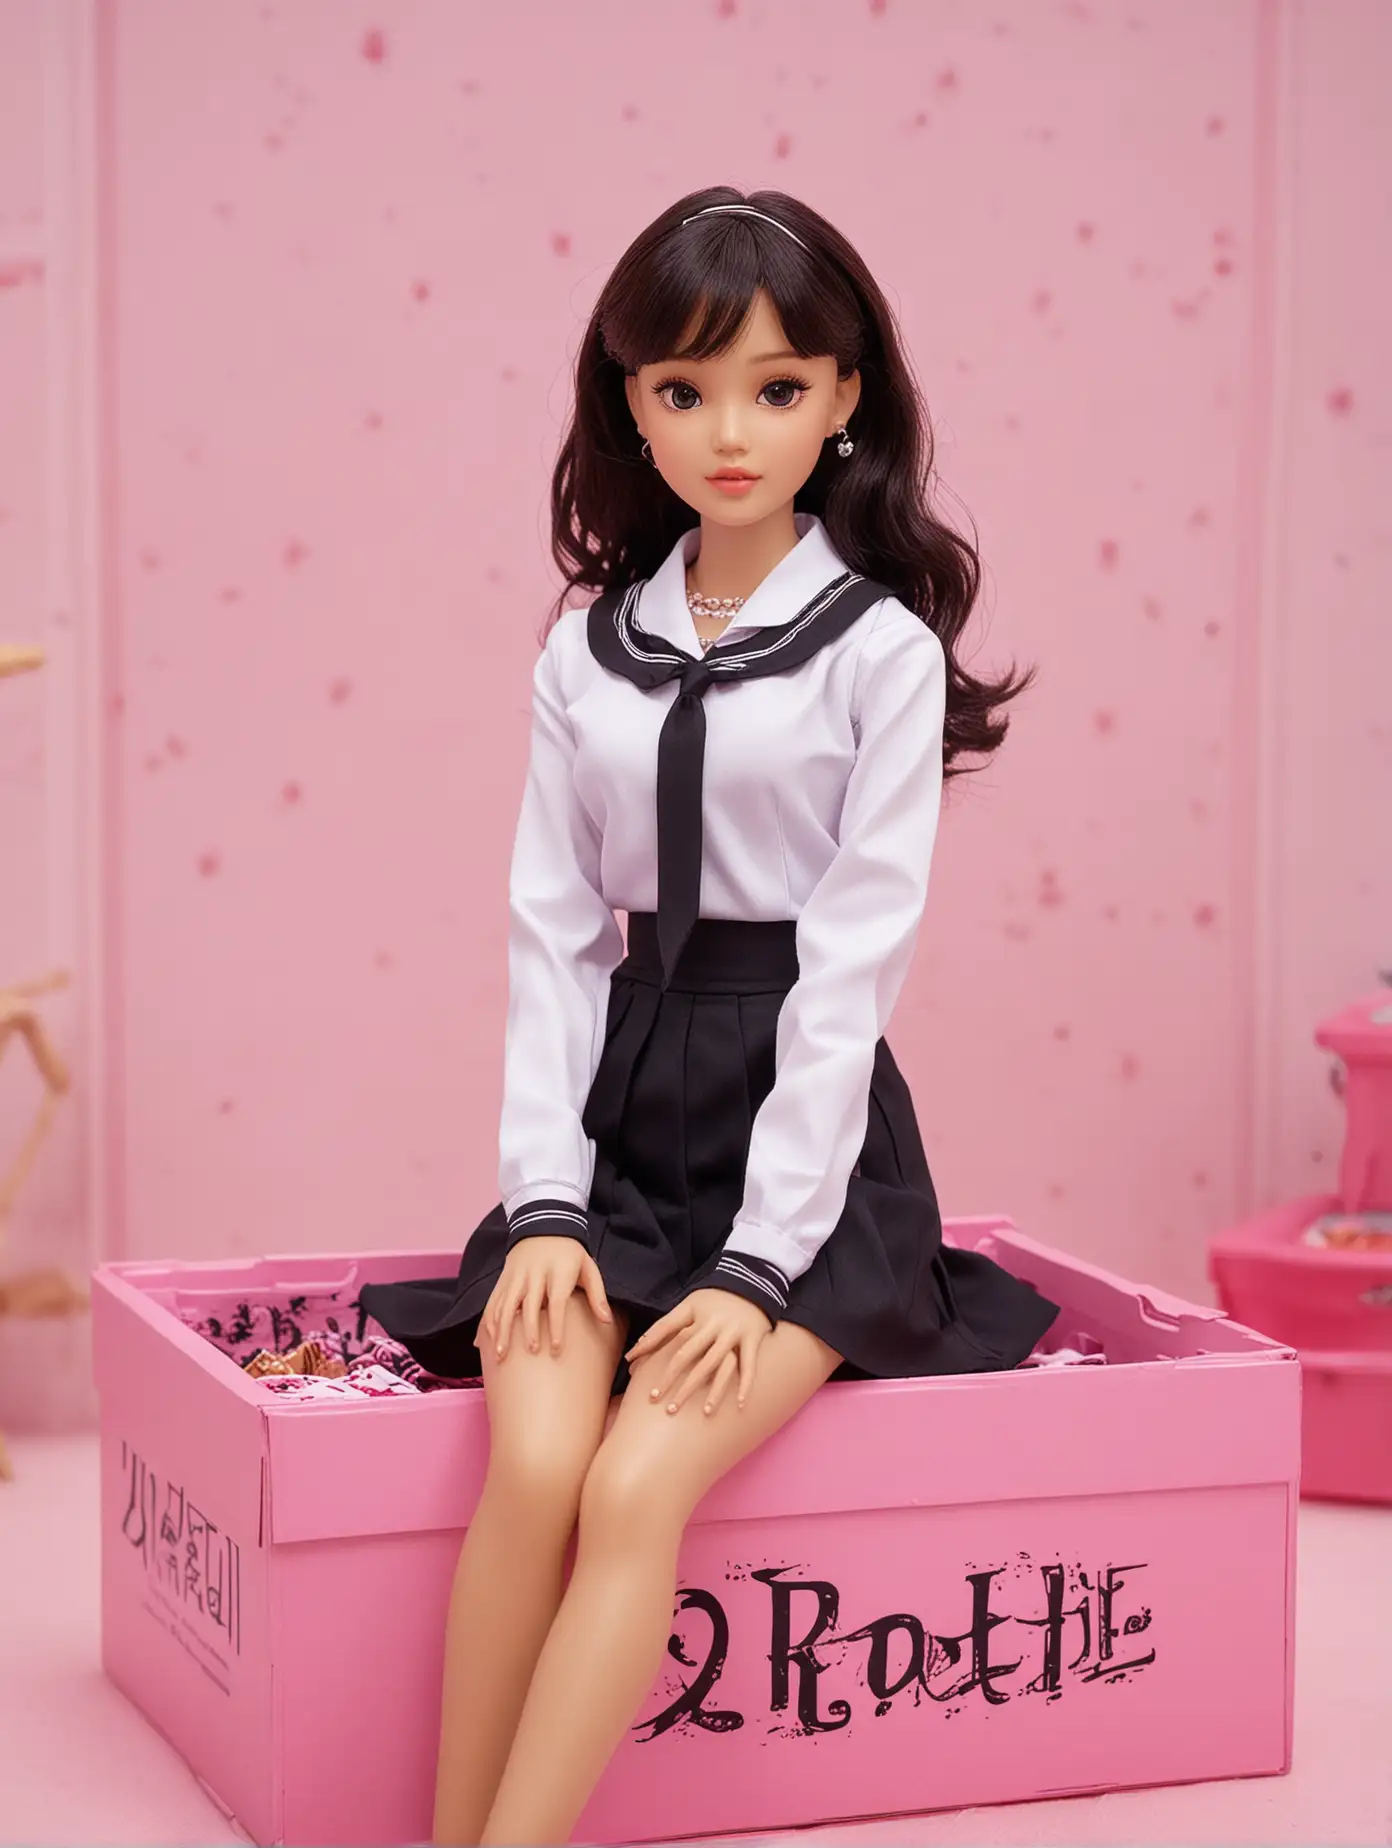 Teenage Barbie Doll Seo Yeaji in Elegant Black and White School Uniform Sitting in Pink Box Room